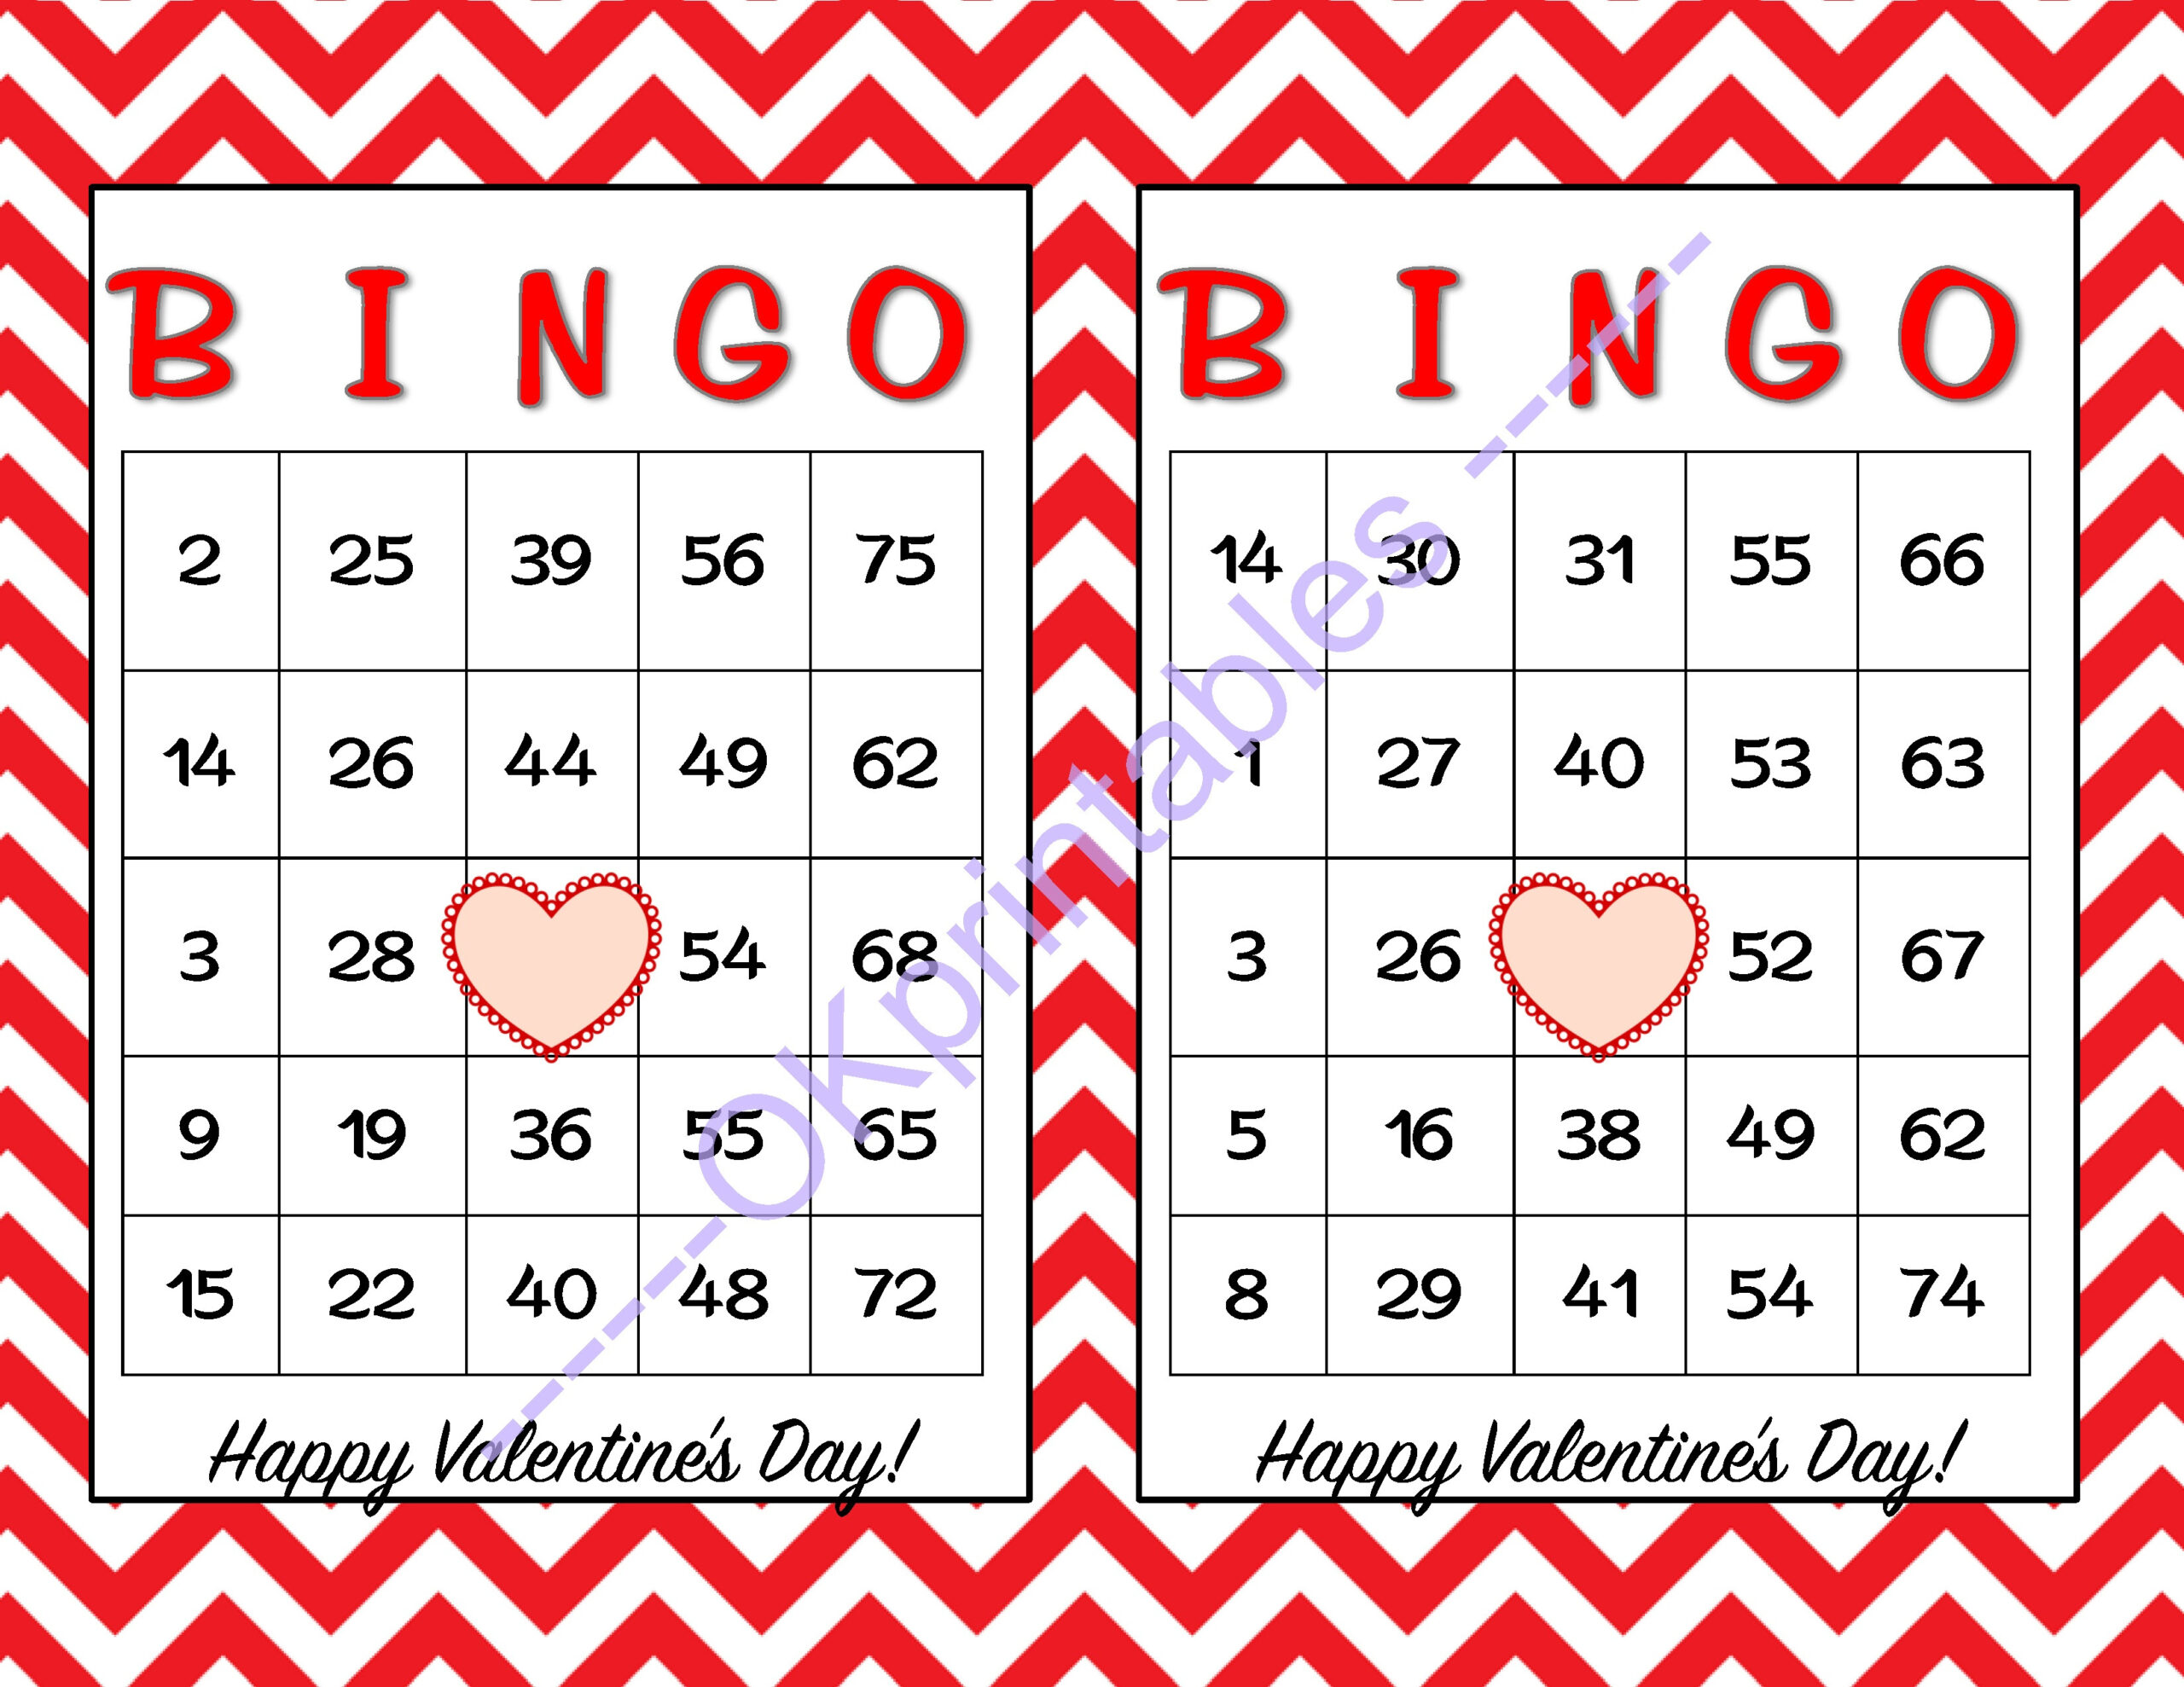 1 9 Bingo Numbers Bingo For Kids Bingo Free Printable Bingo Cards 